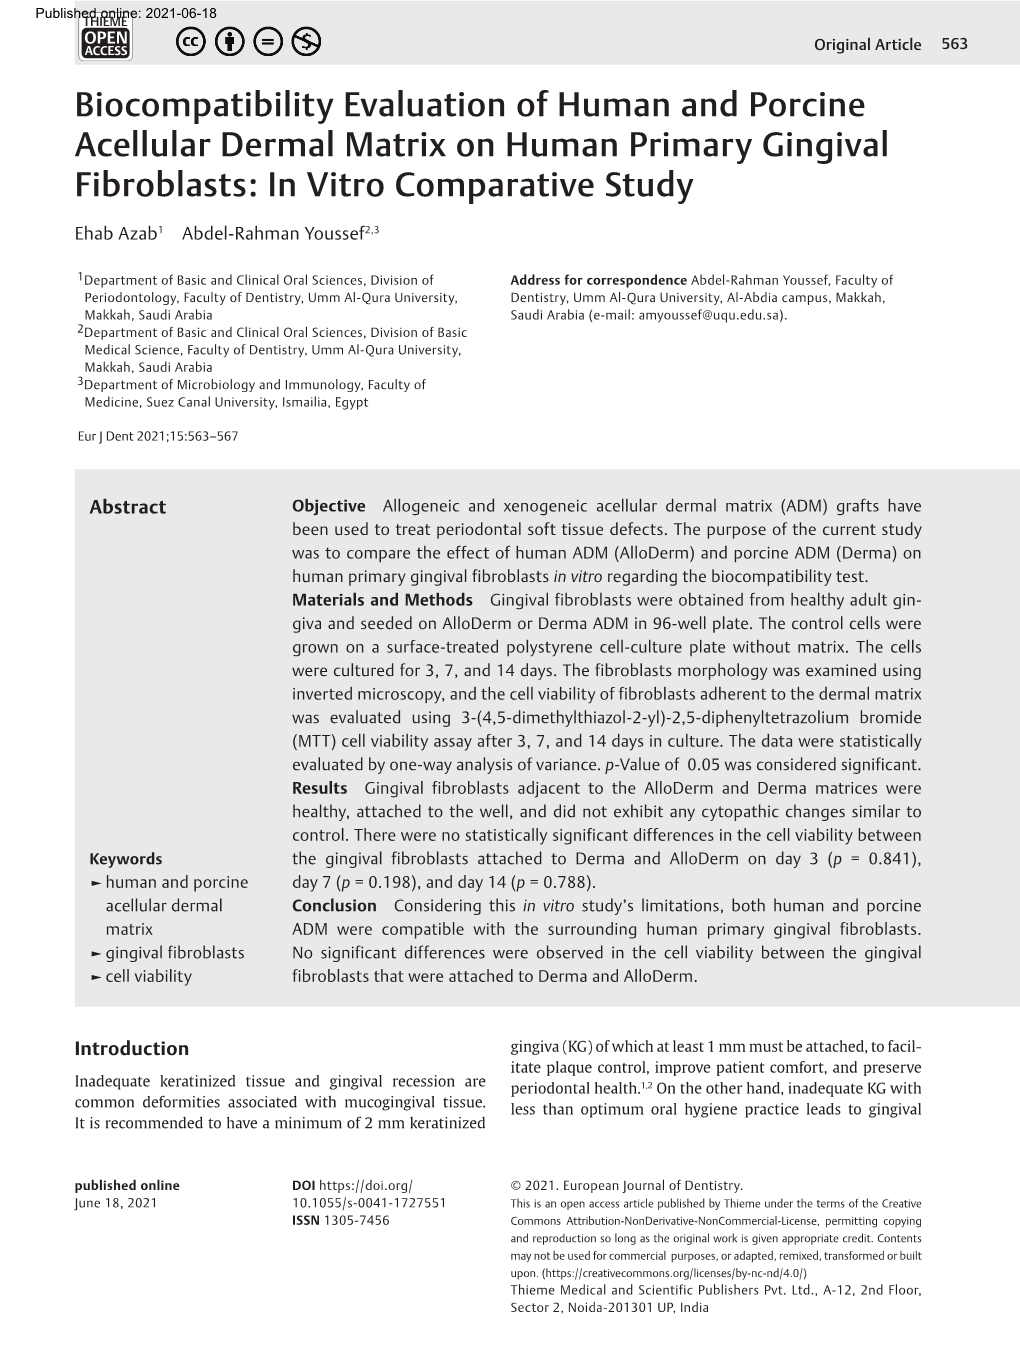 Biocompatibility Evaluation of Human and Porcine Acellular Dermal Matrix on Human Primary Gingival Fibroblasts: in Vitro Comparative Study